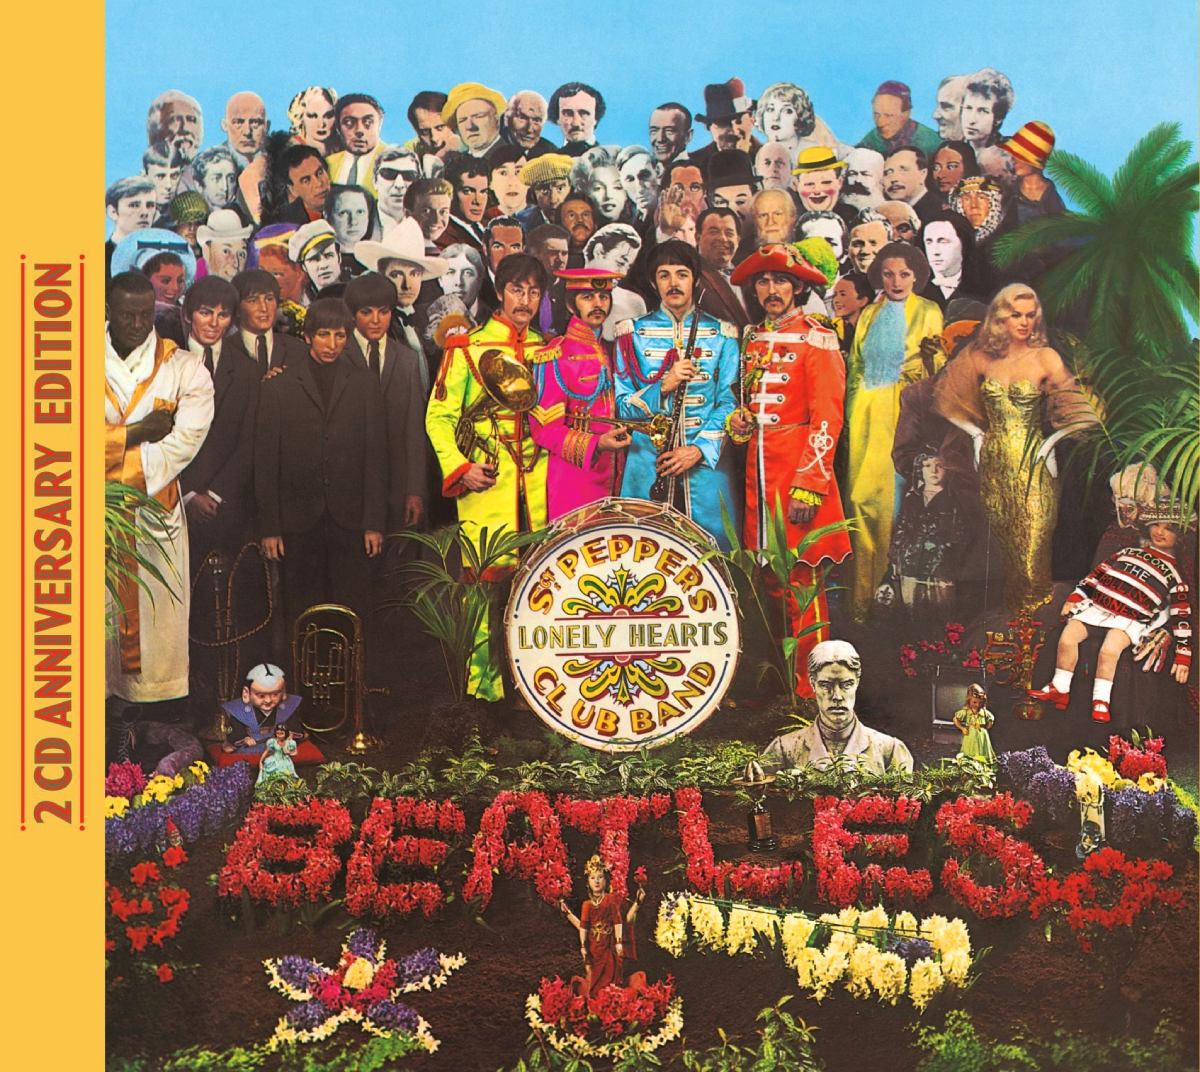 Sgt. Pepper's Lonely Hearts Club Band (album des Beatles)